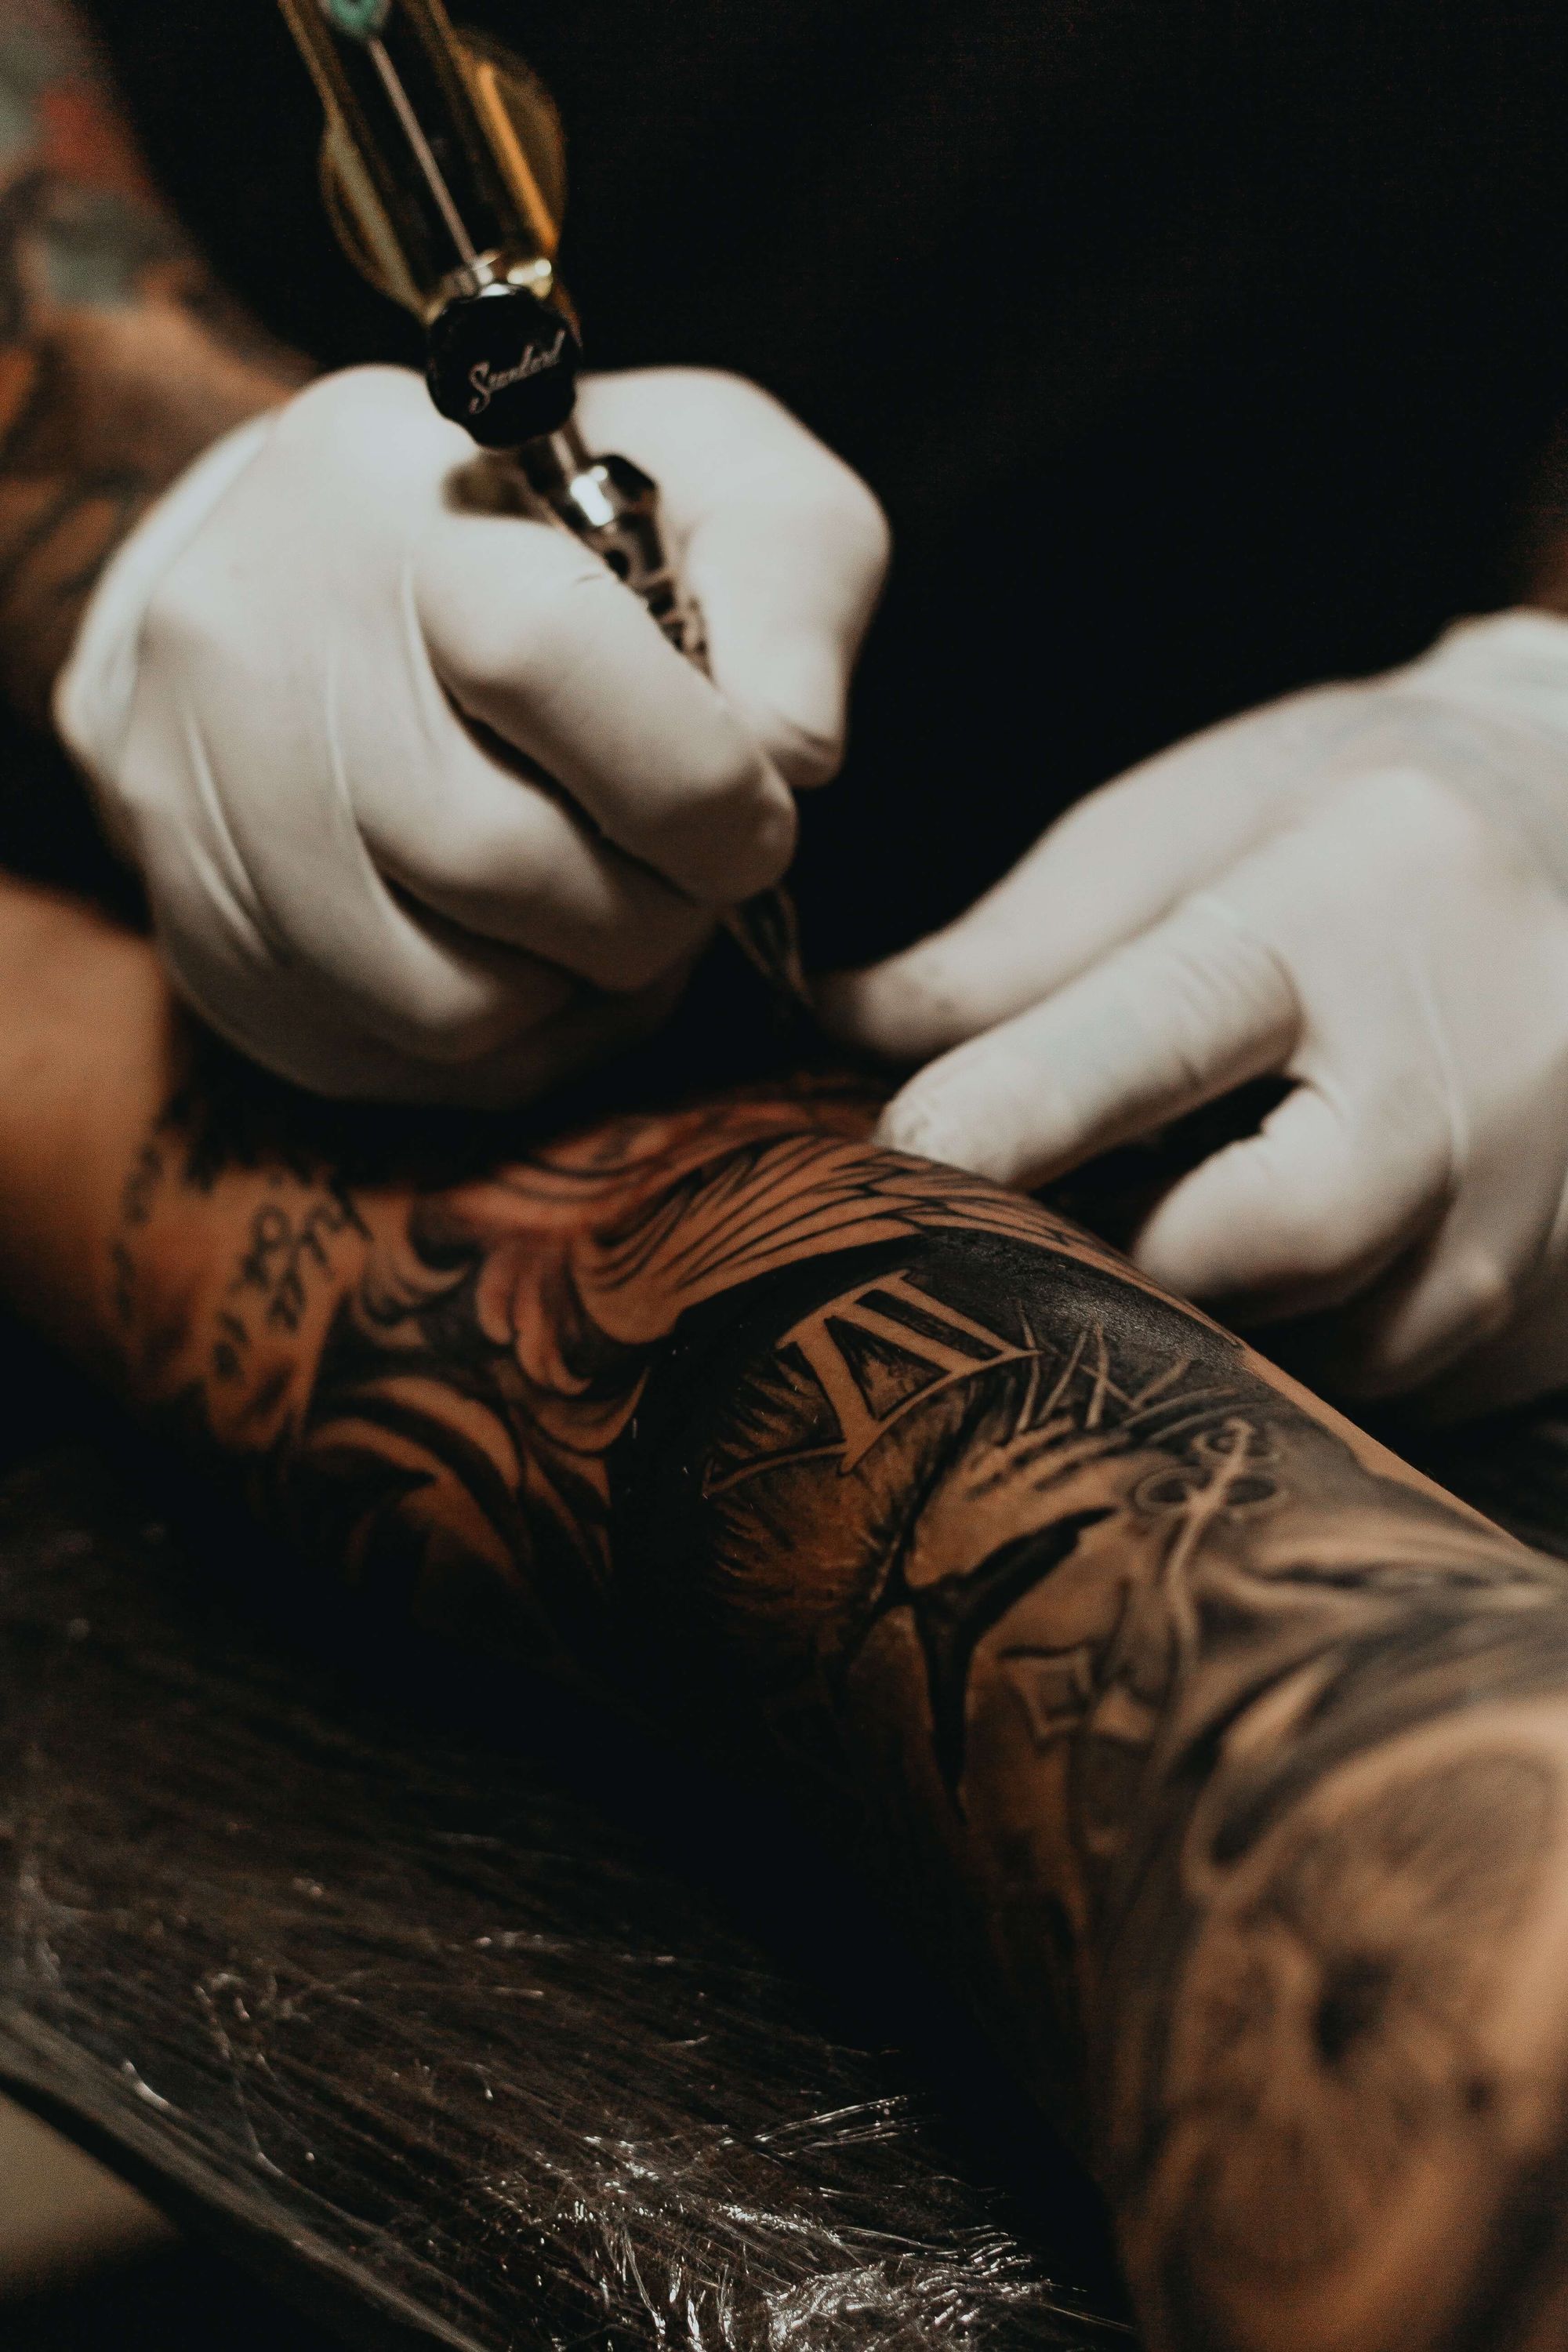 Tattoo – an Arabic word